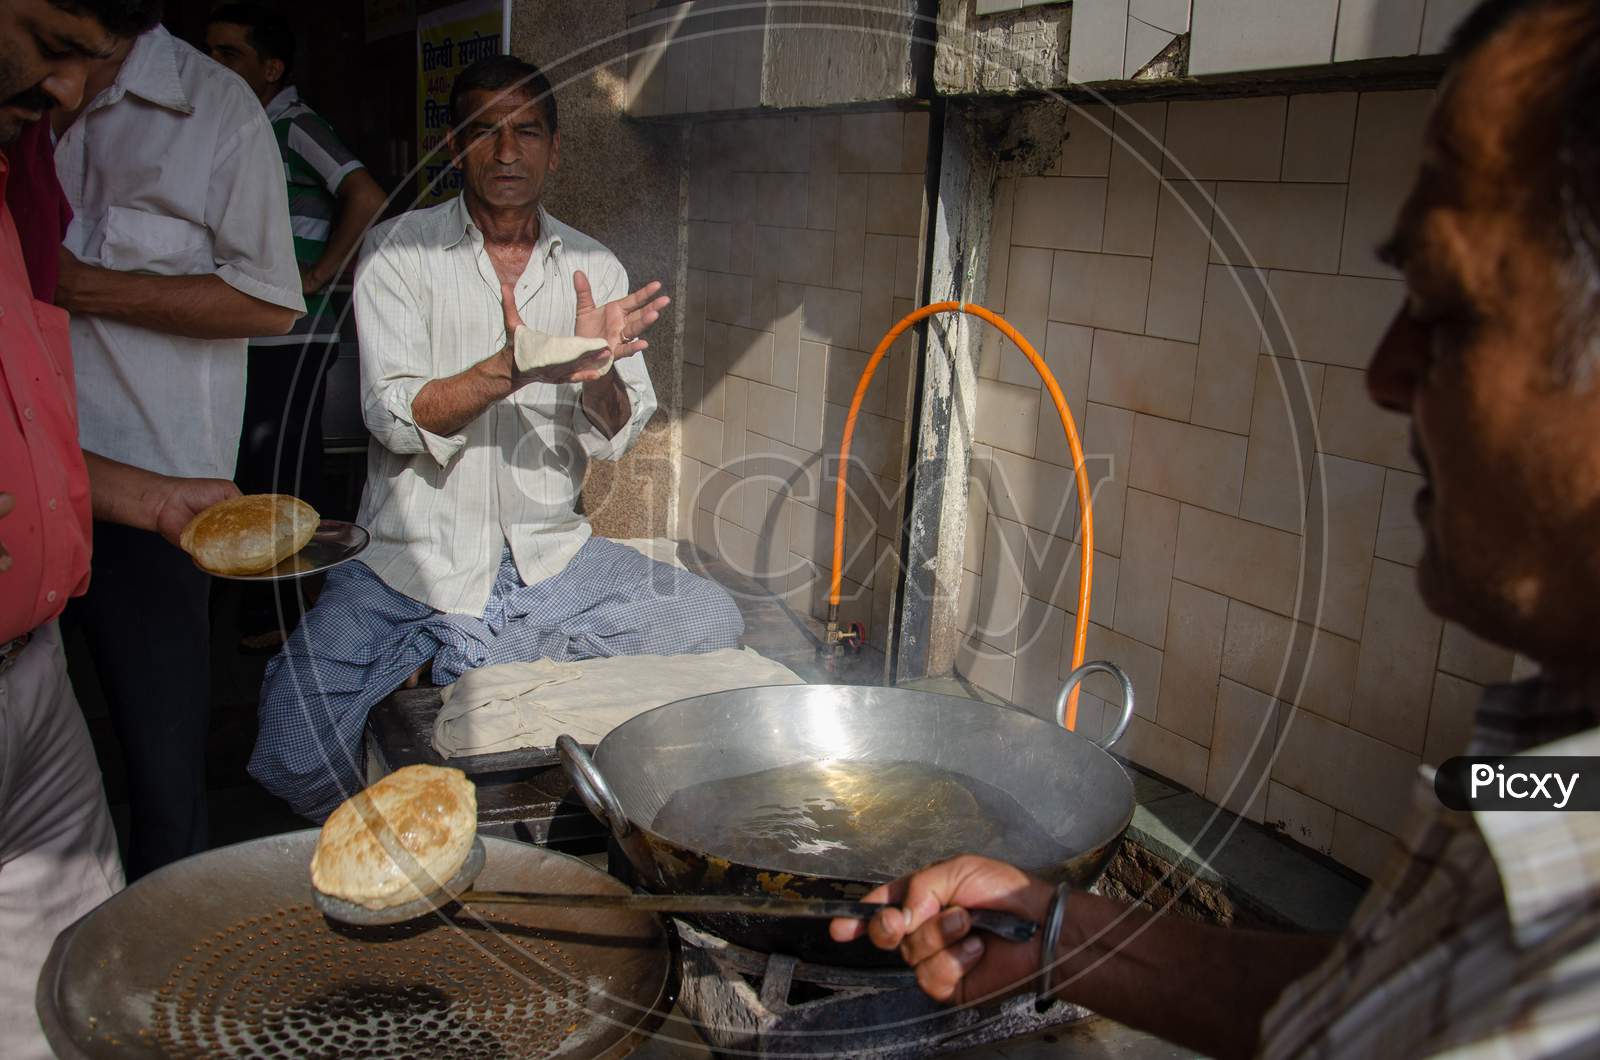 Street Food Vendor Making Poori Or Bature At a Street Food Stall